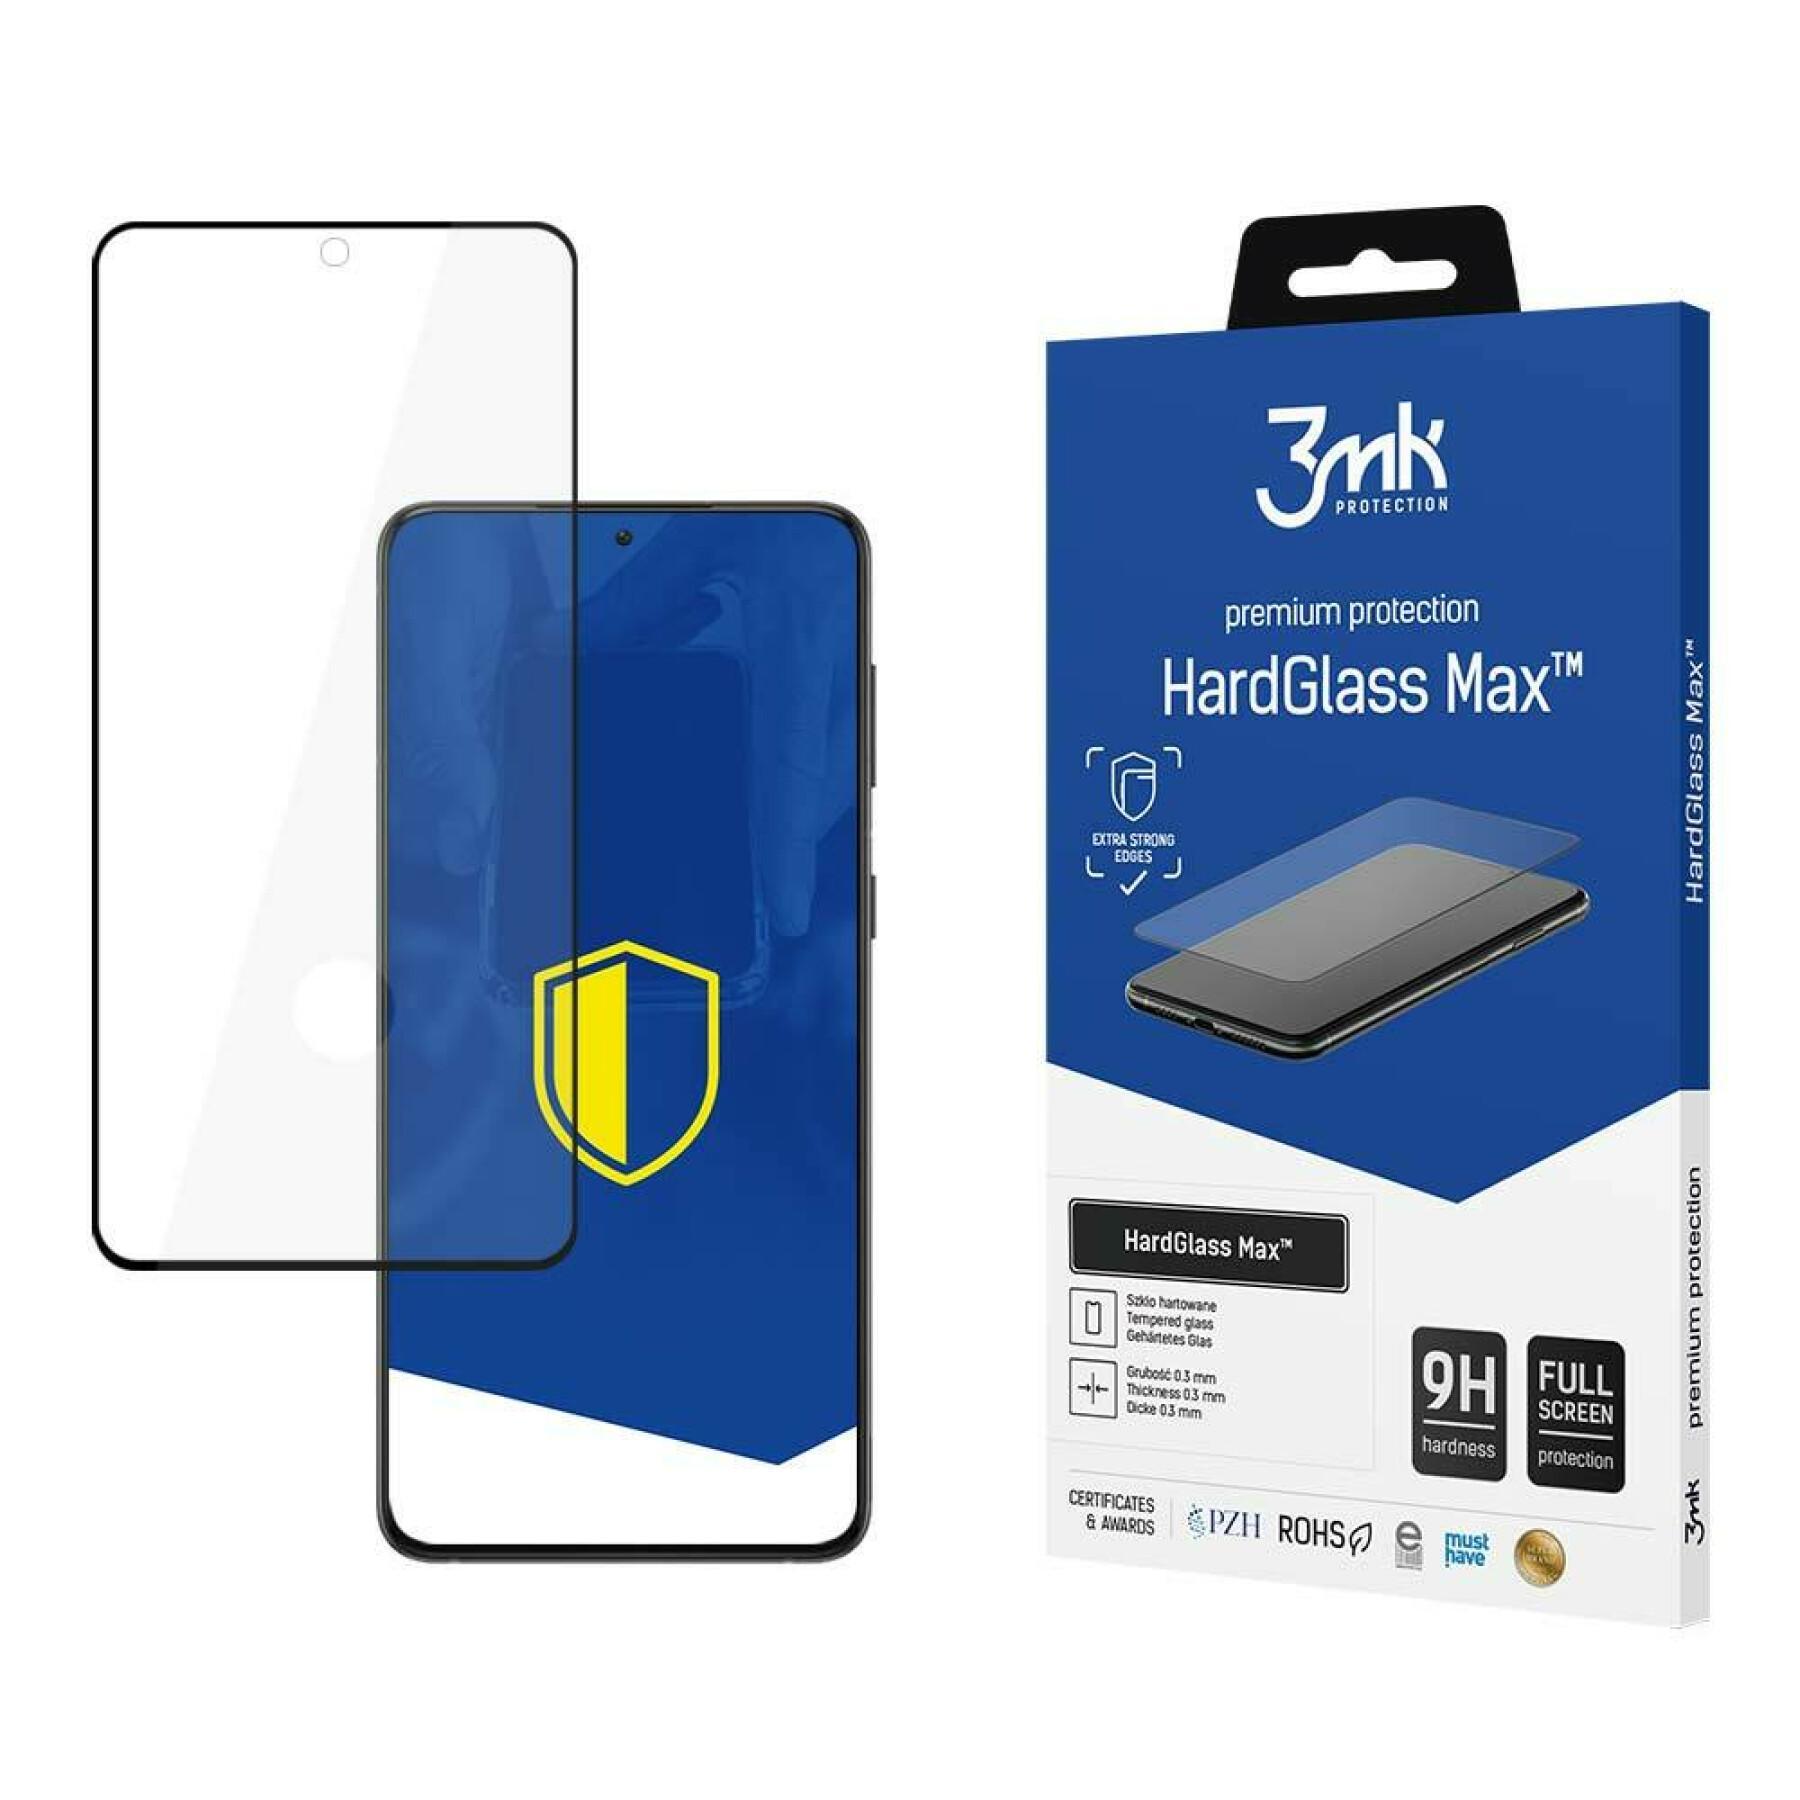 Verre trempé renforcé 3MK Samsung Galaxy S21 Ultra 5G - HardGlass Max™ FP -  Accessoires - Equipements - Running